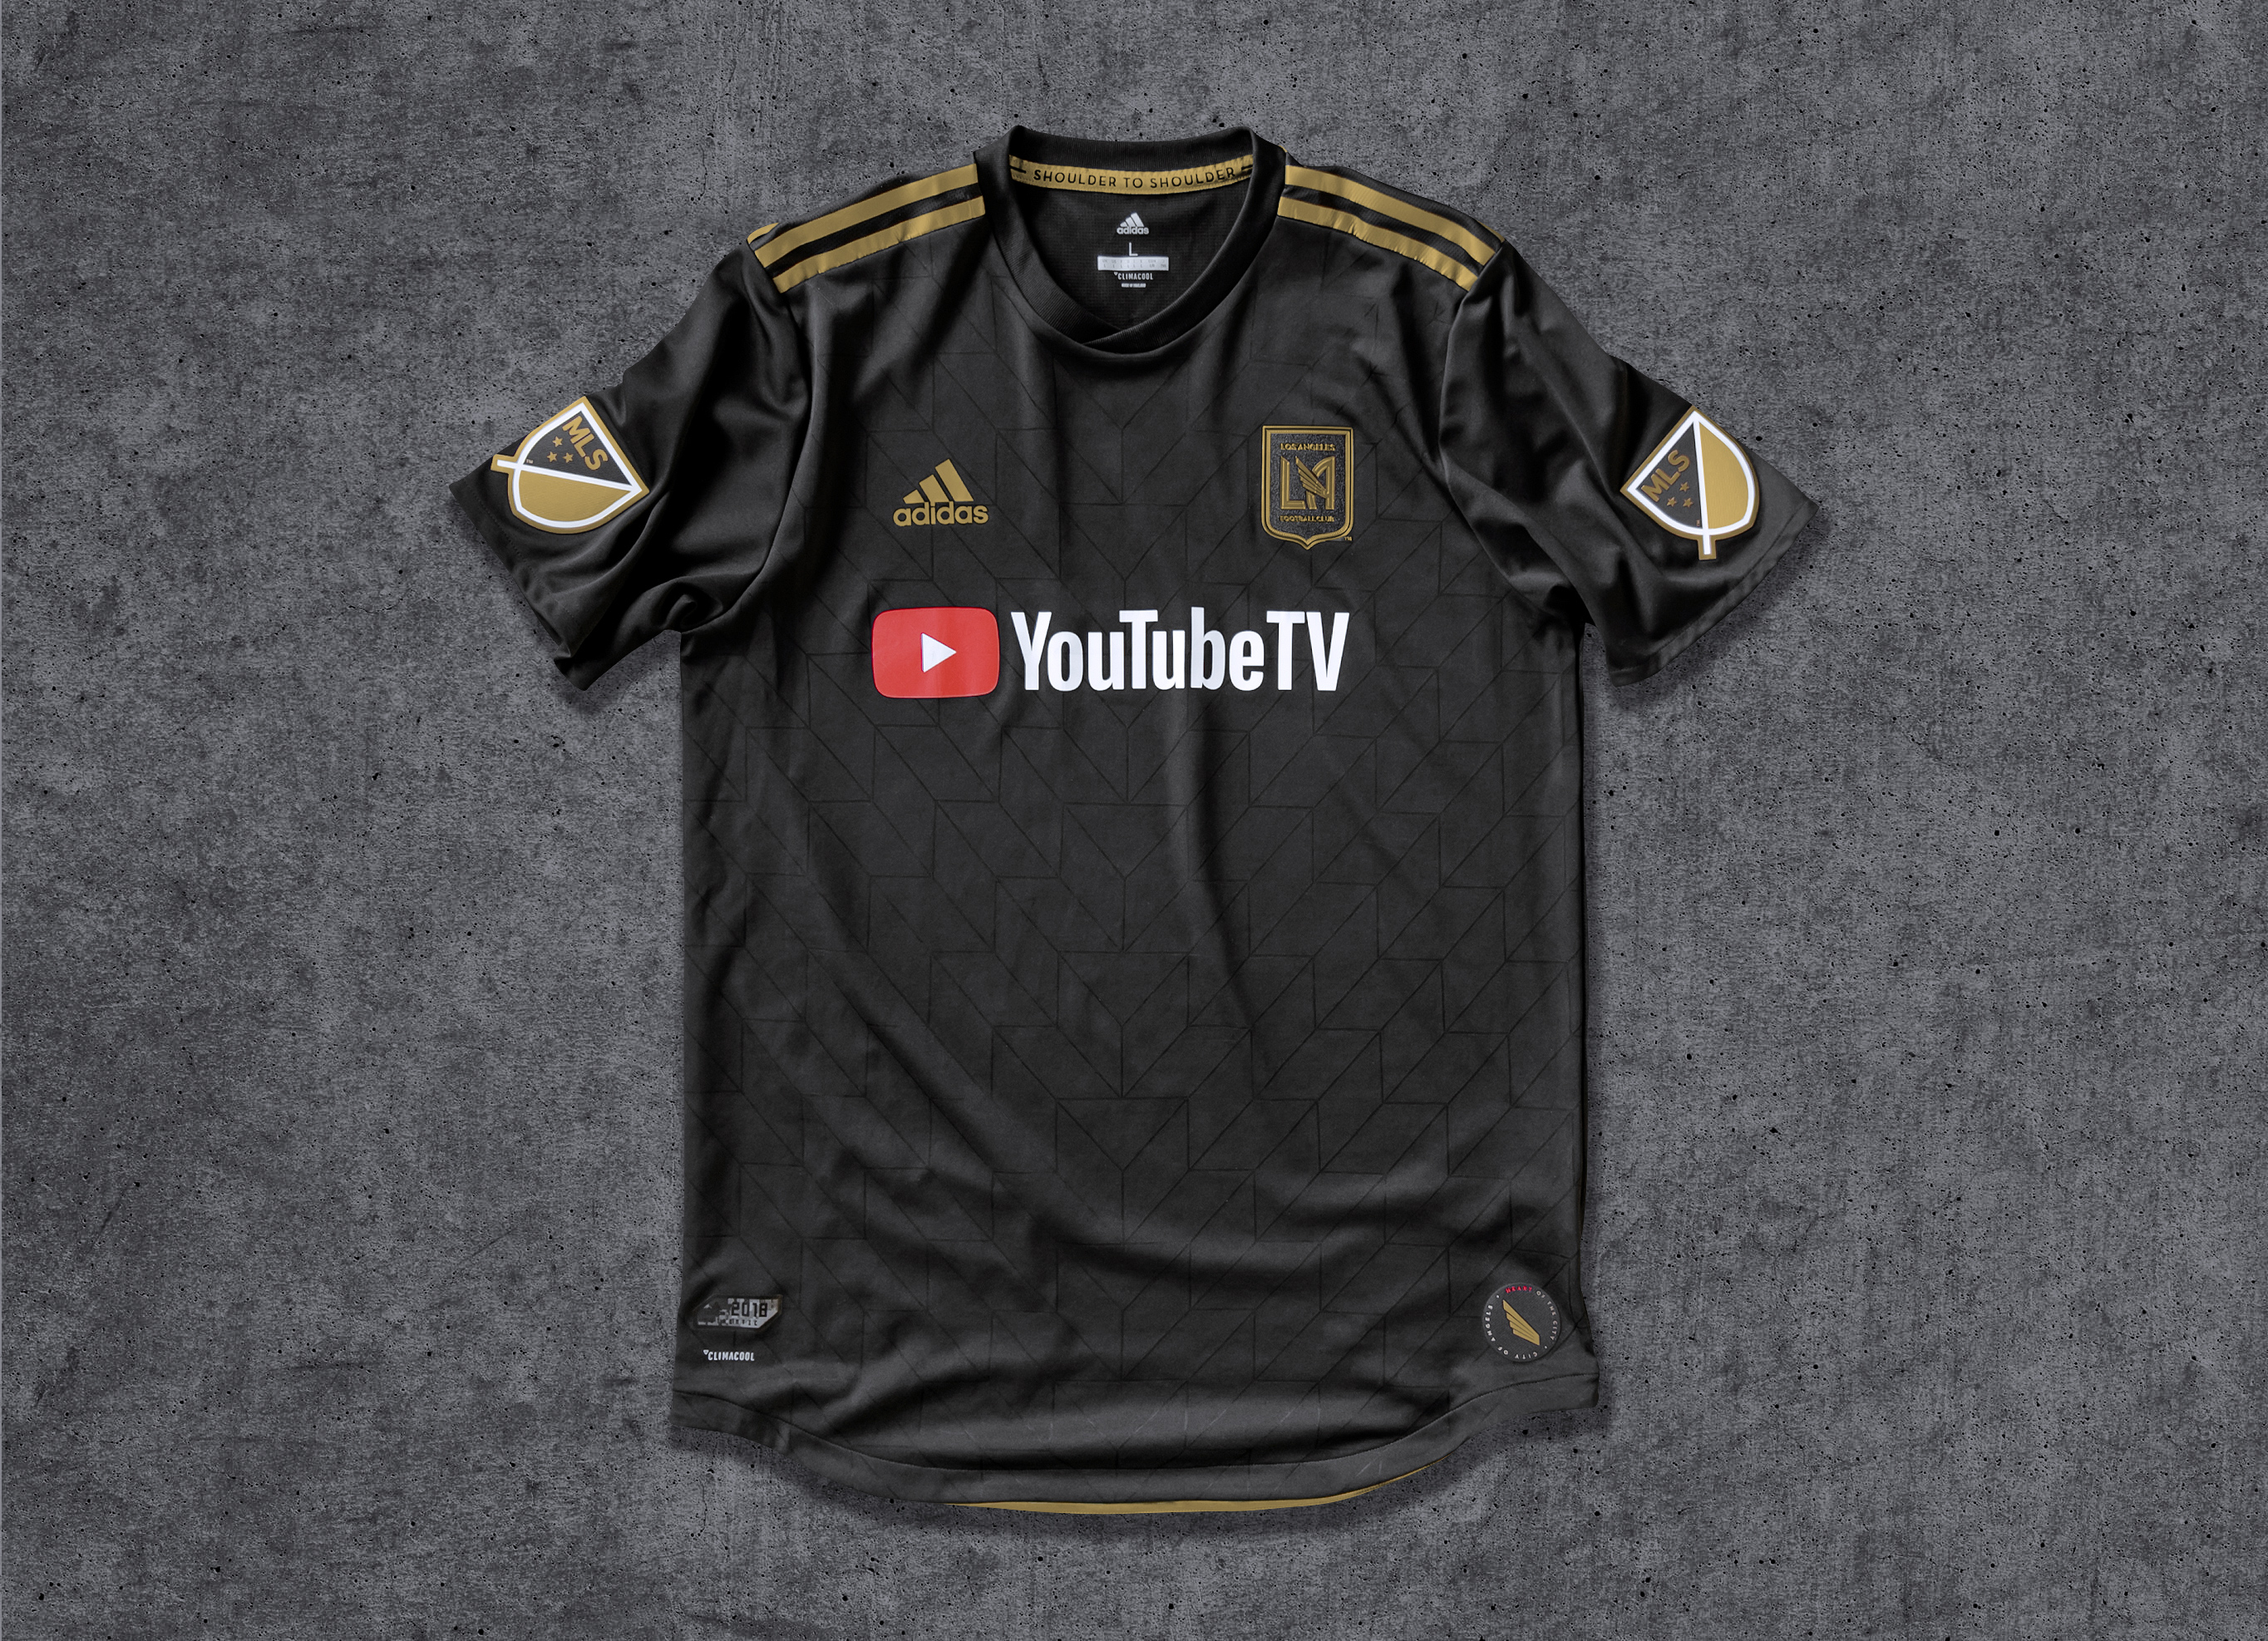 adidas 2018 calcio youtube